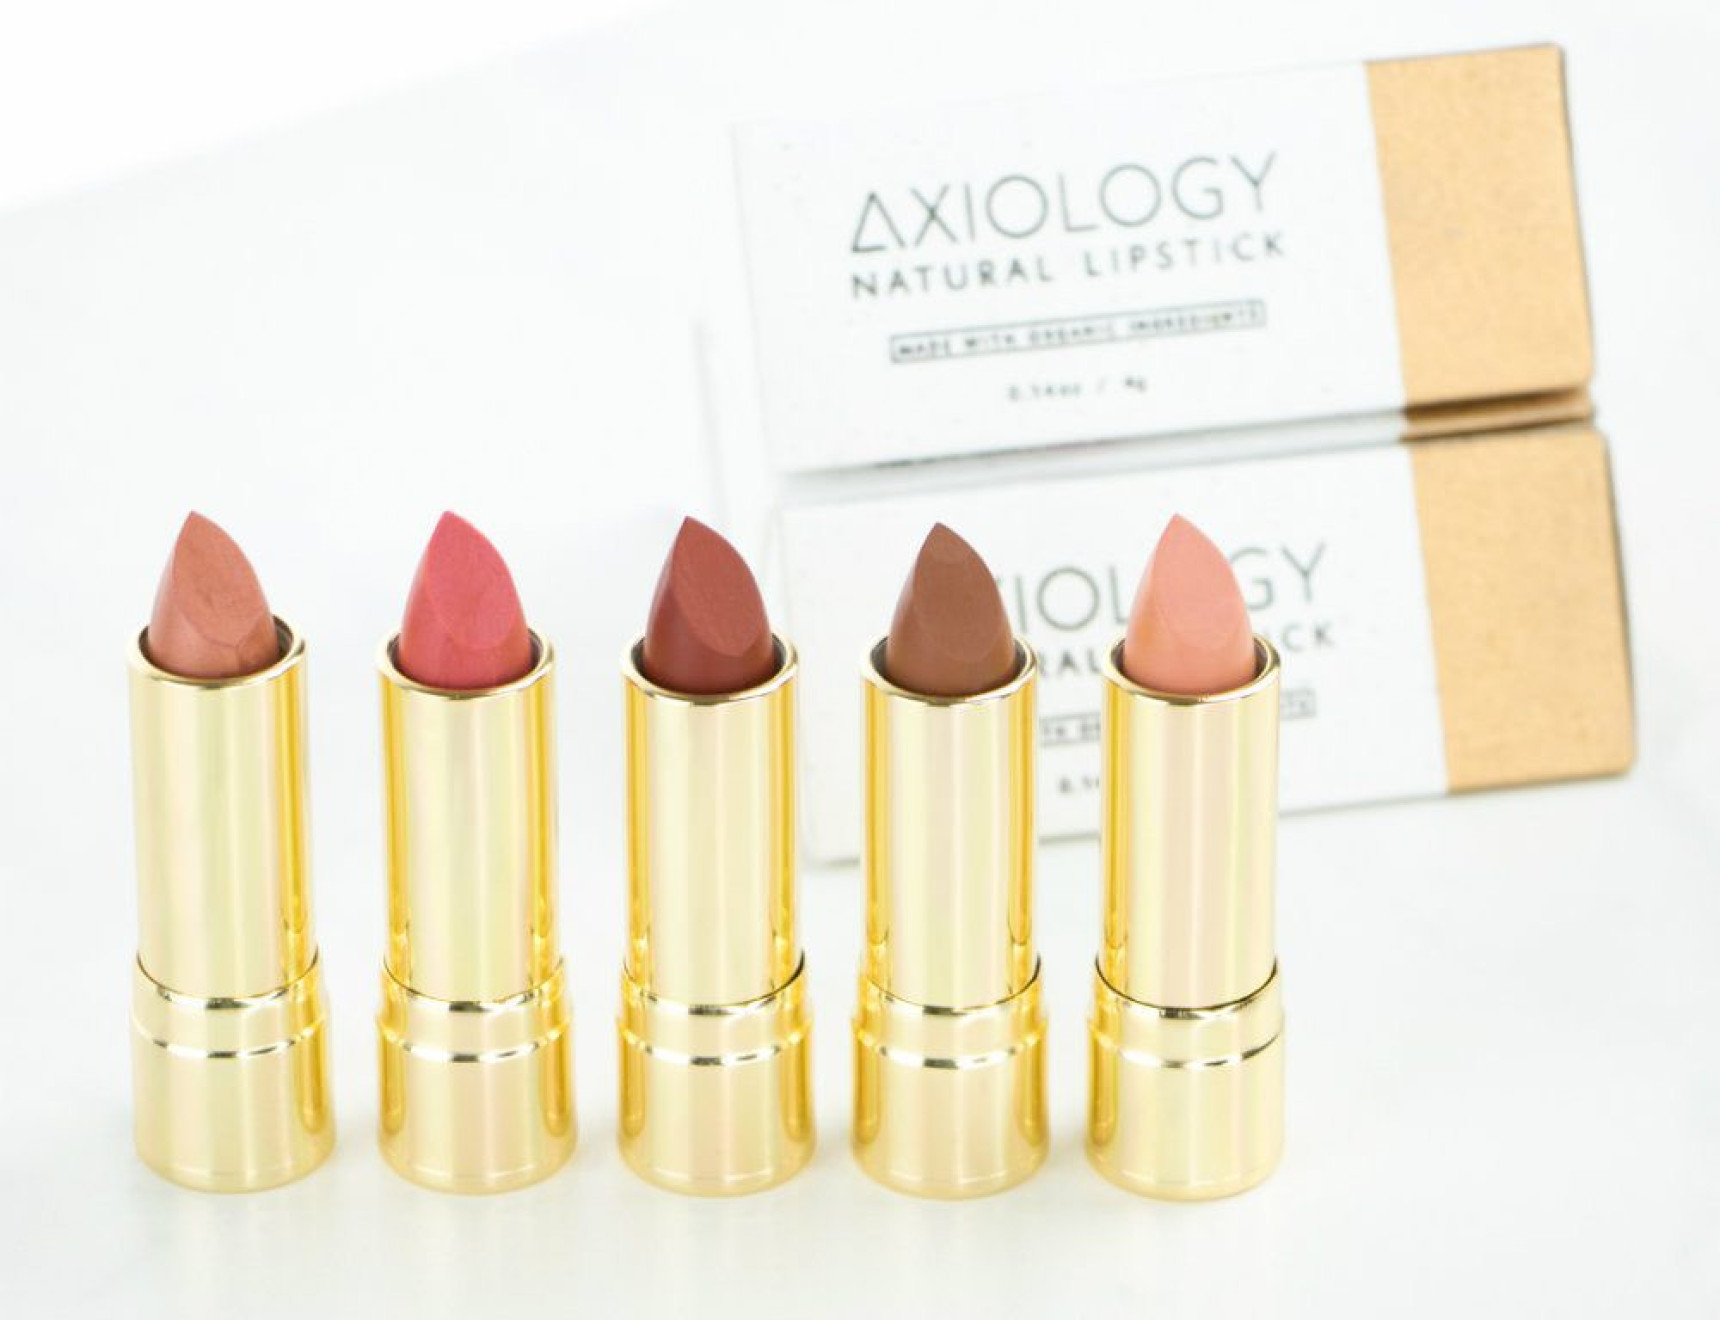 Axiology lipsticks